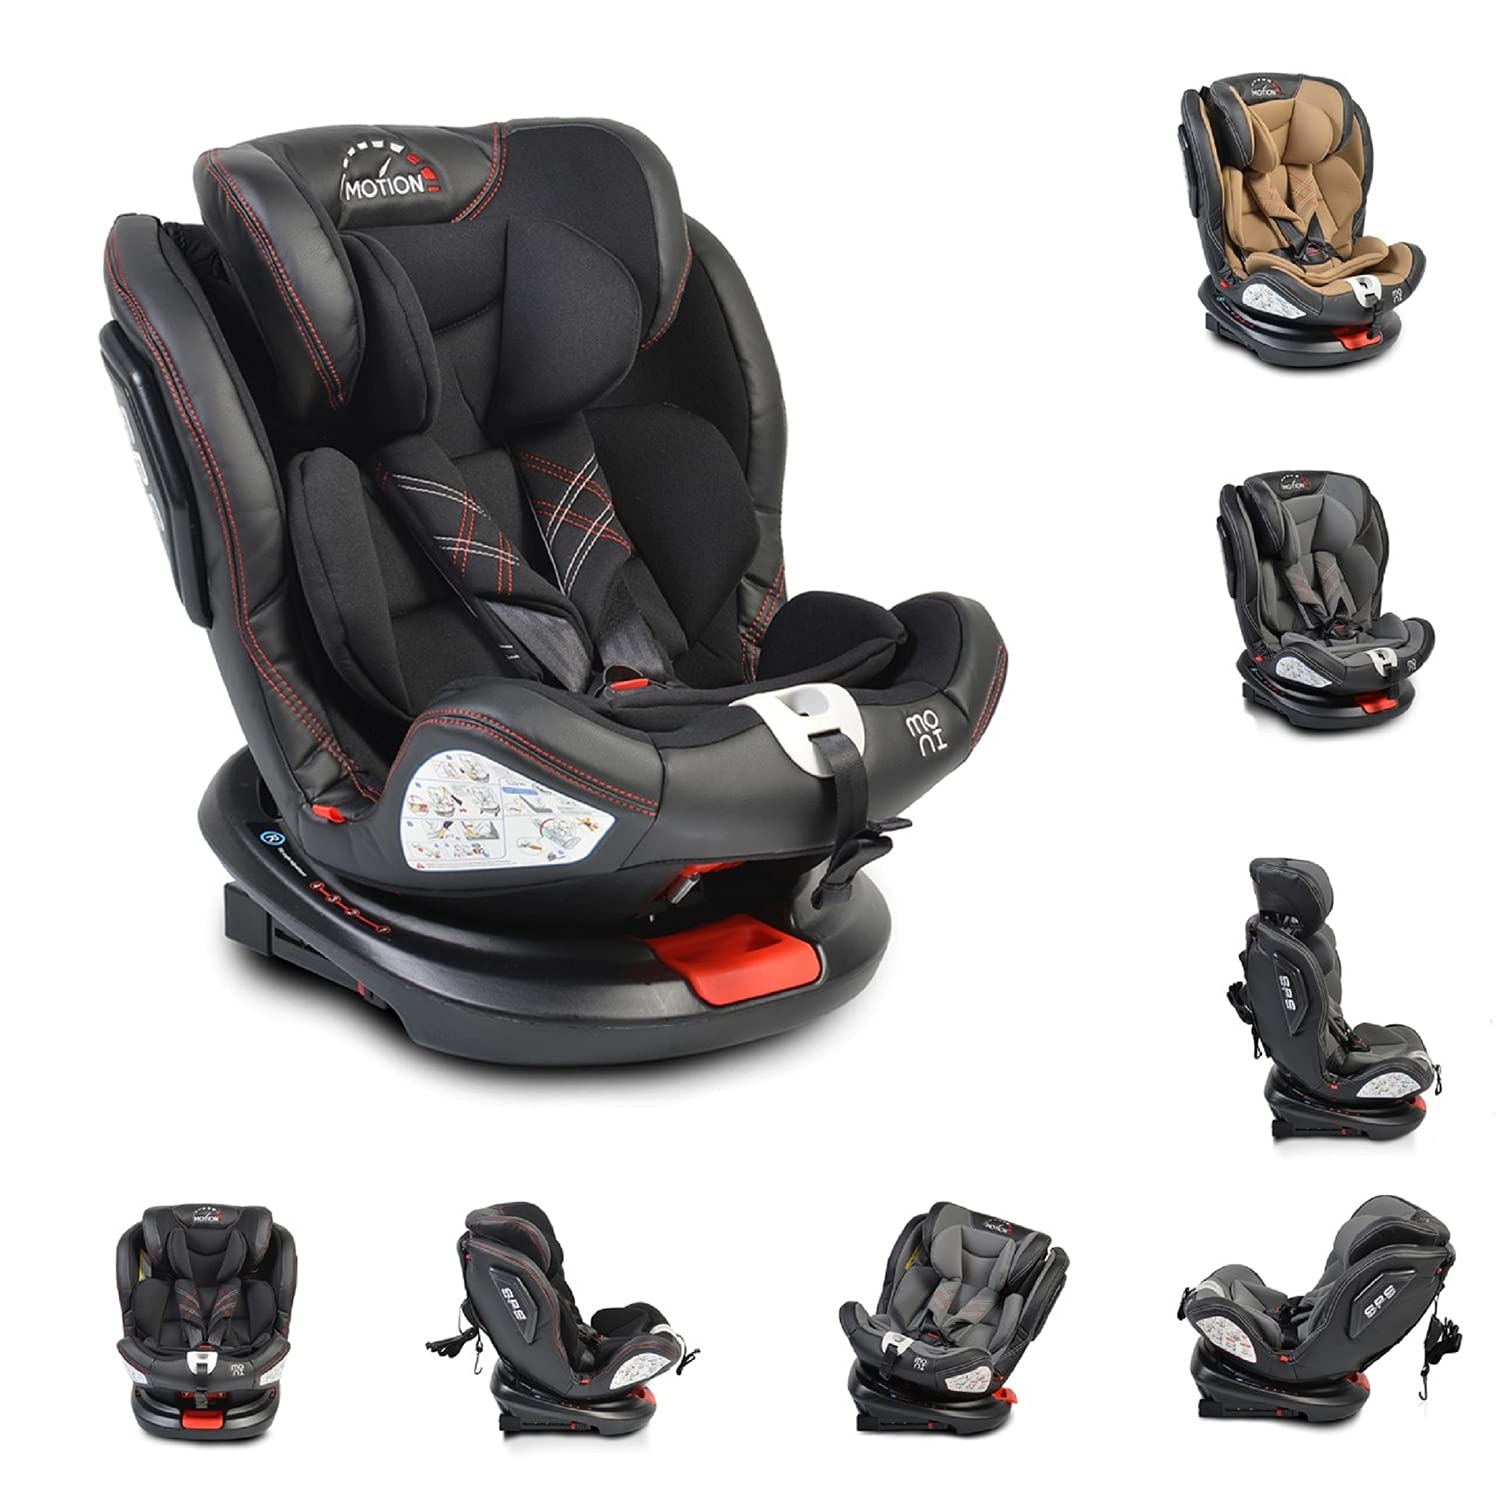 Cangaroo Moni Motion Child Seat 0-36 kg Group 0/1/2/3 Rotatable 165° Tilt Isofix SIPS, Colours: Black